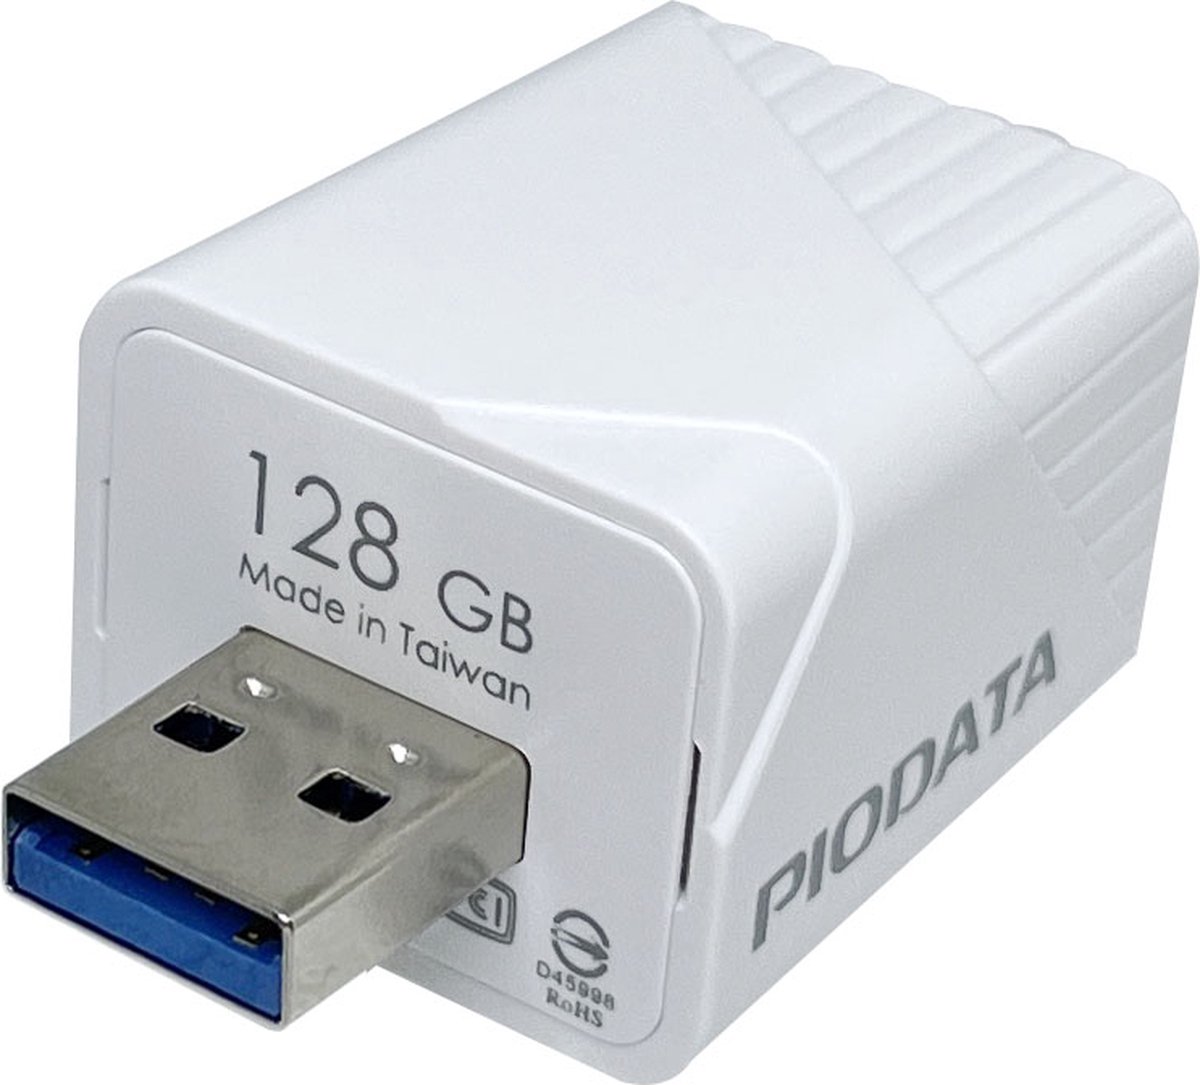 PioData iXflash CUBE 128GB USB-A Back-up foto's en video terwijl je jouw telefoon oplaadt